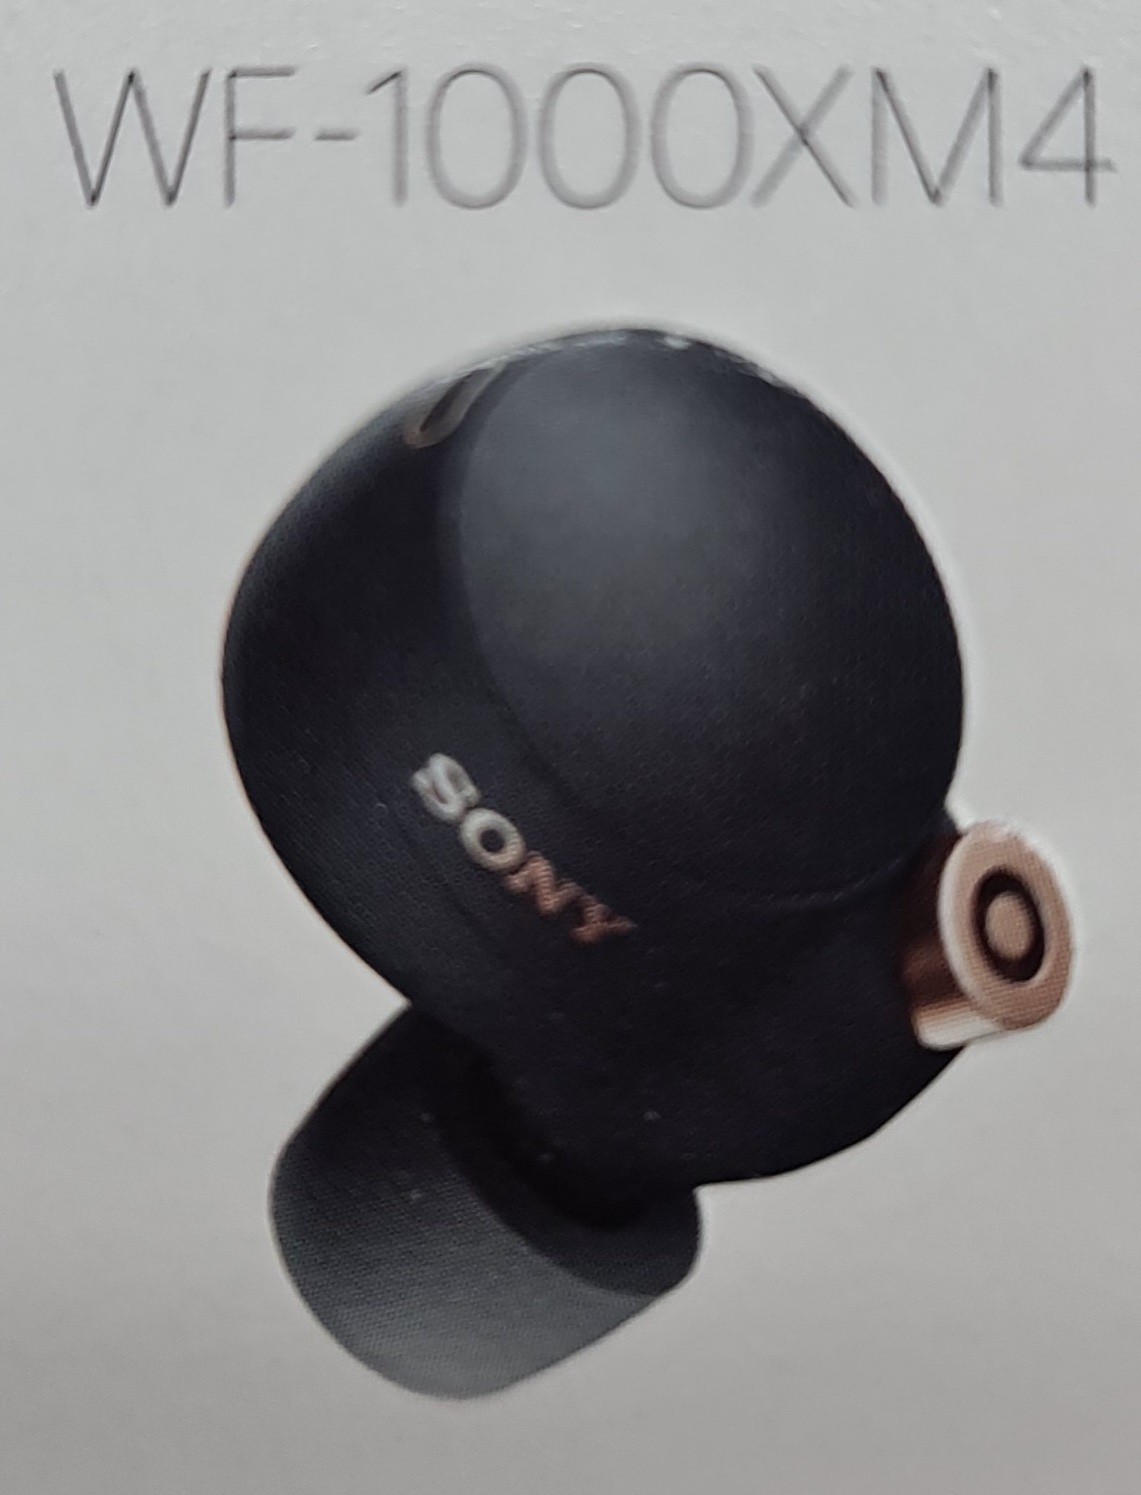 Sony 新款真無線主動降噪耳機WF-1000XM4 不清晰圖片曝光，外型設計將